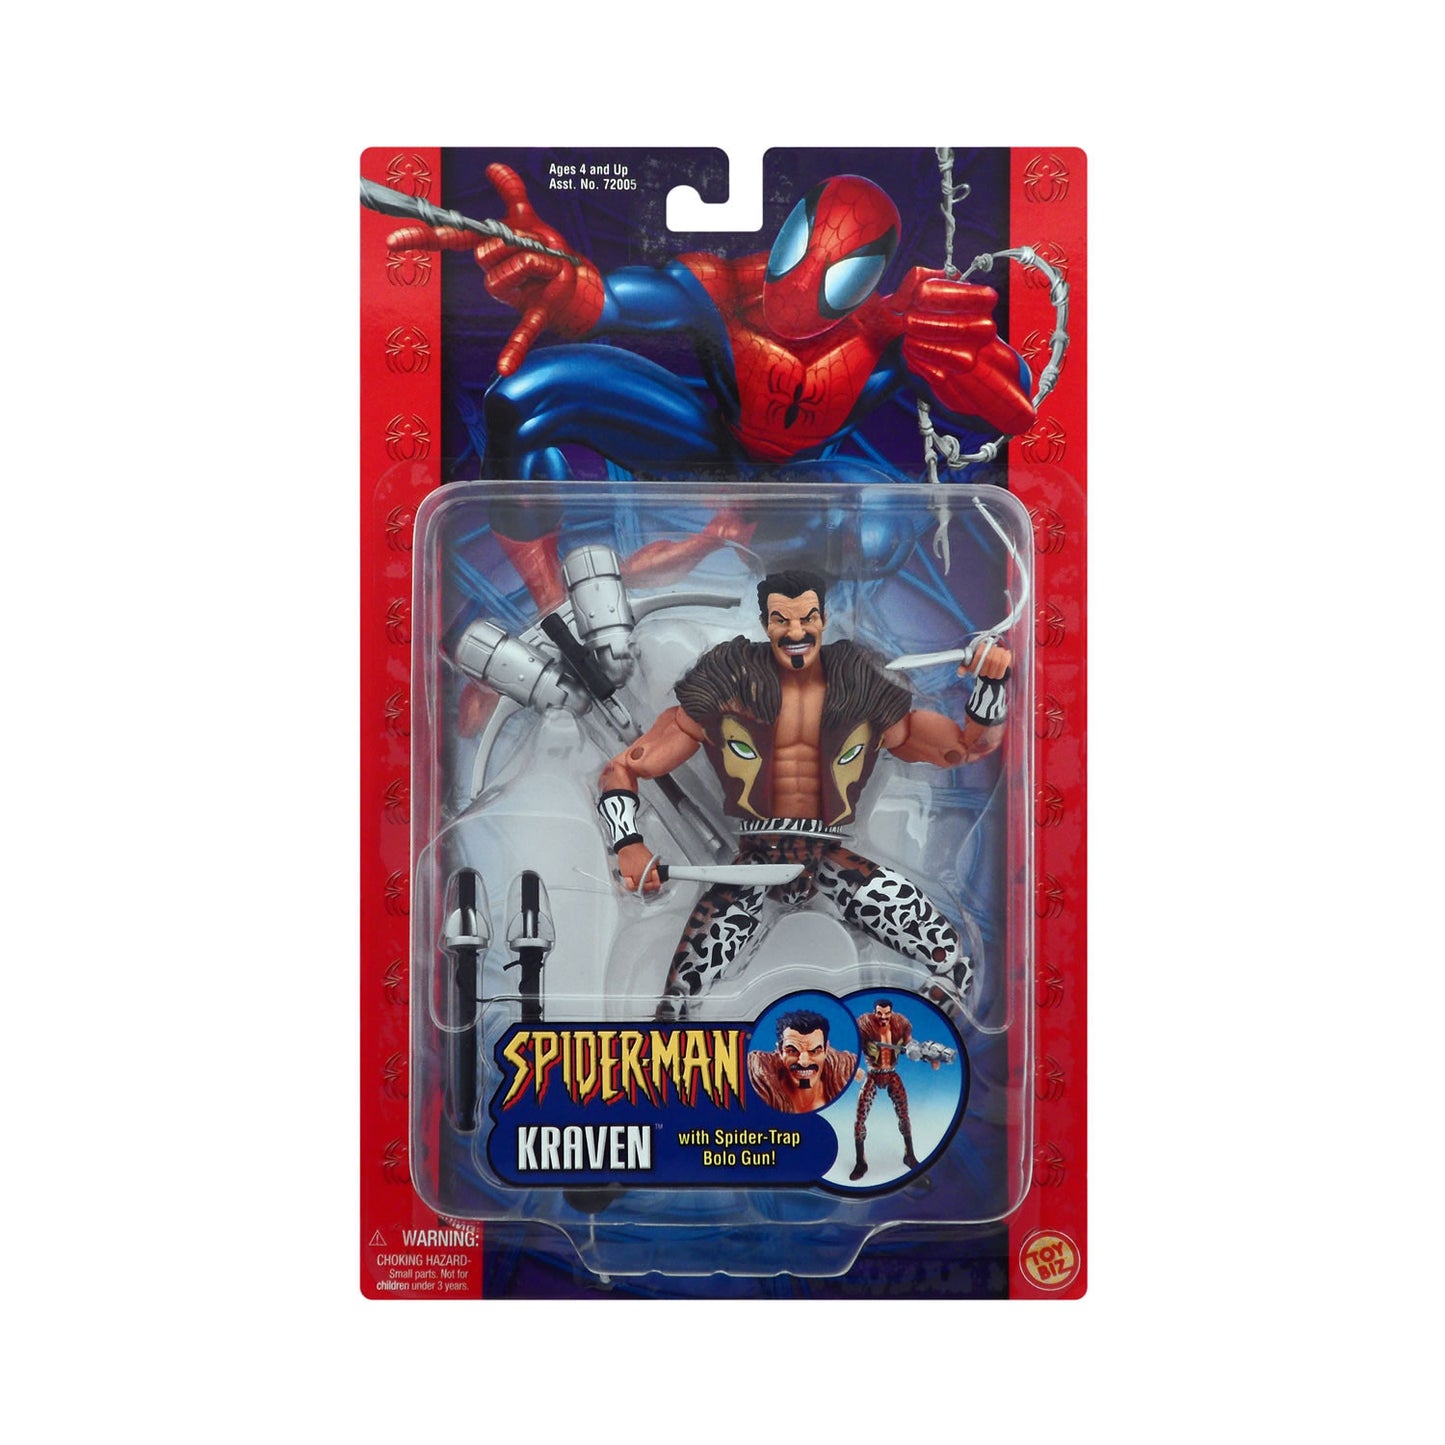 Kraven with Spider-Trap Bolo Gun from Spider-Man